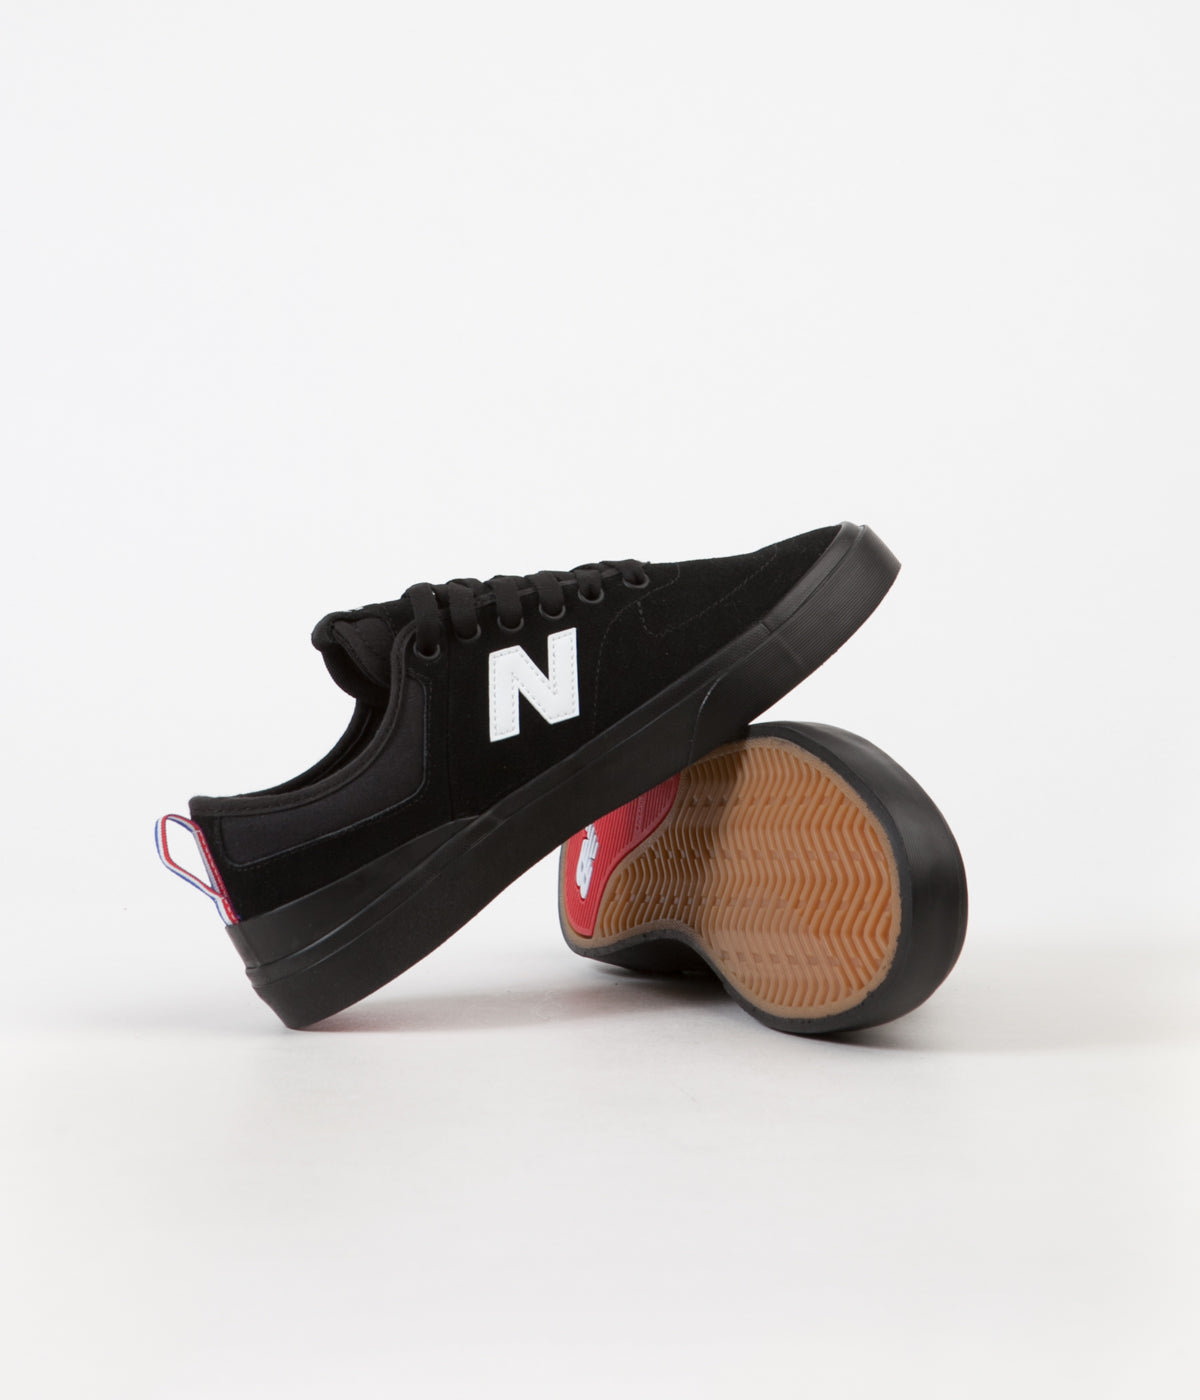 New Balance Numeric 379 Shoes - Black 